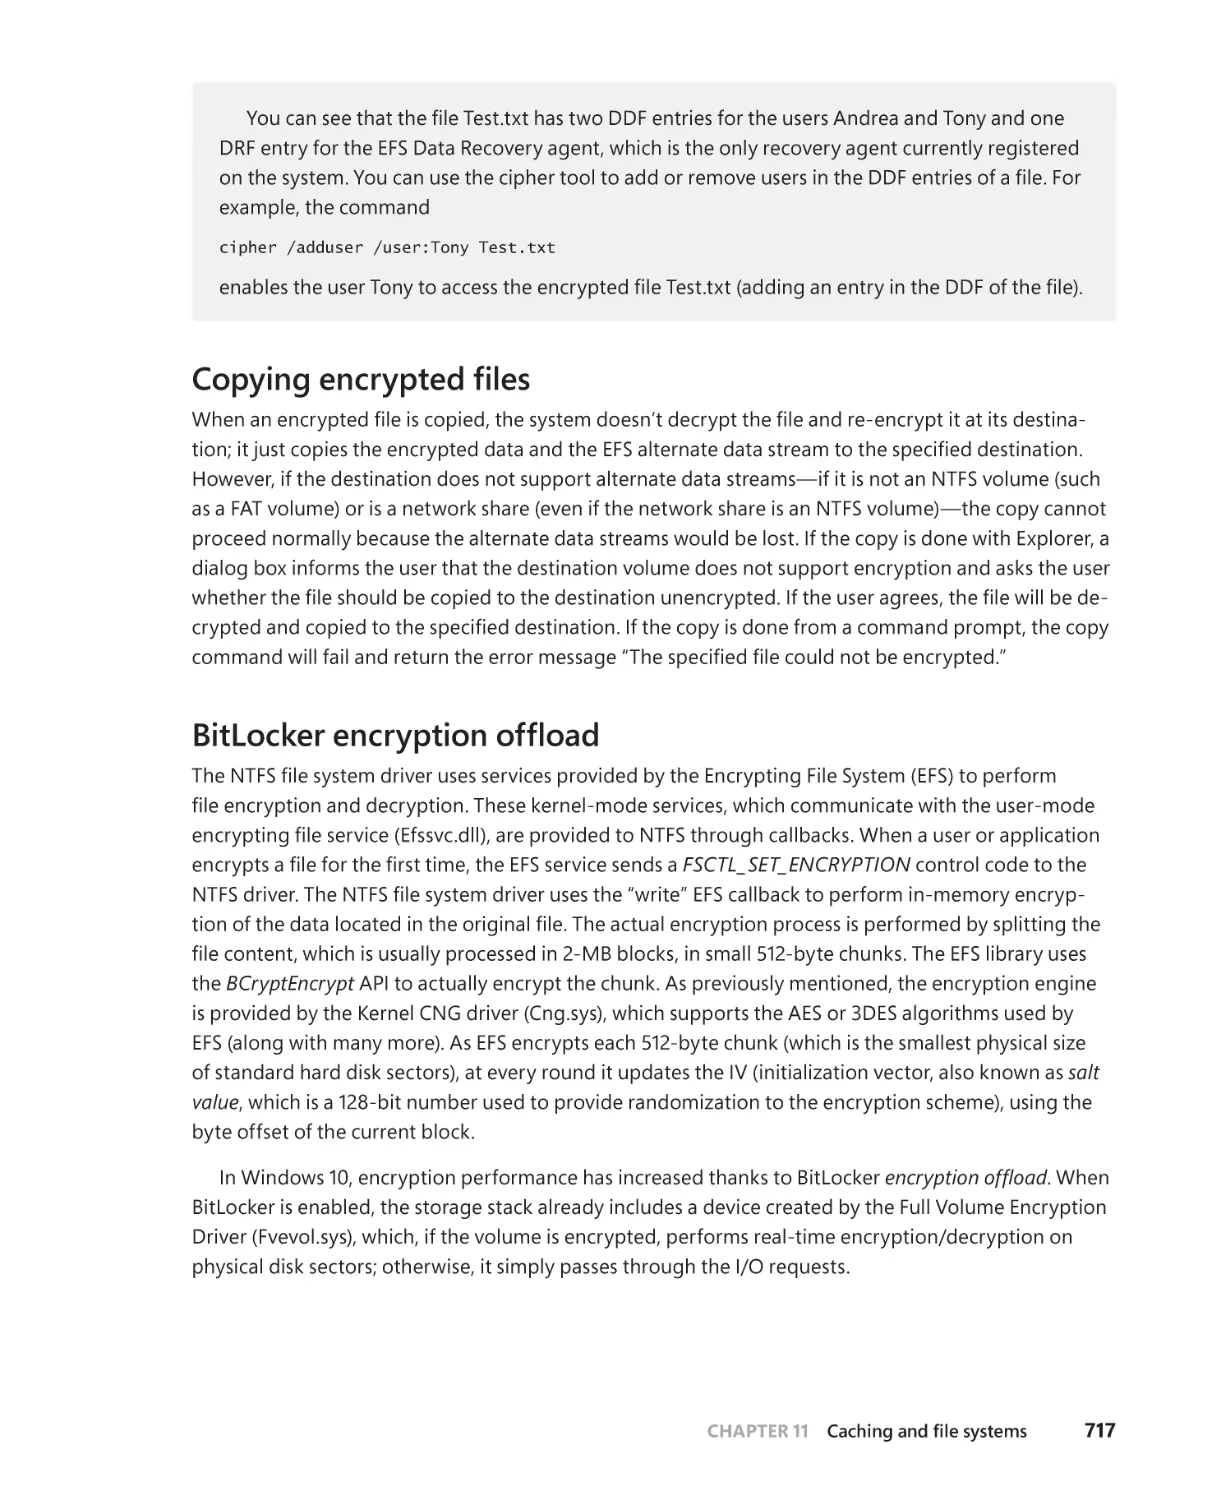 Copying encrypted files
BitLocker encryption offload